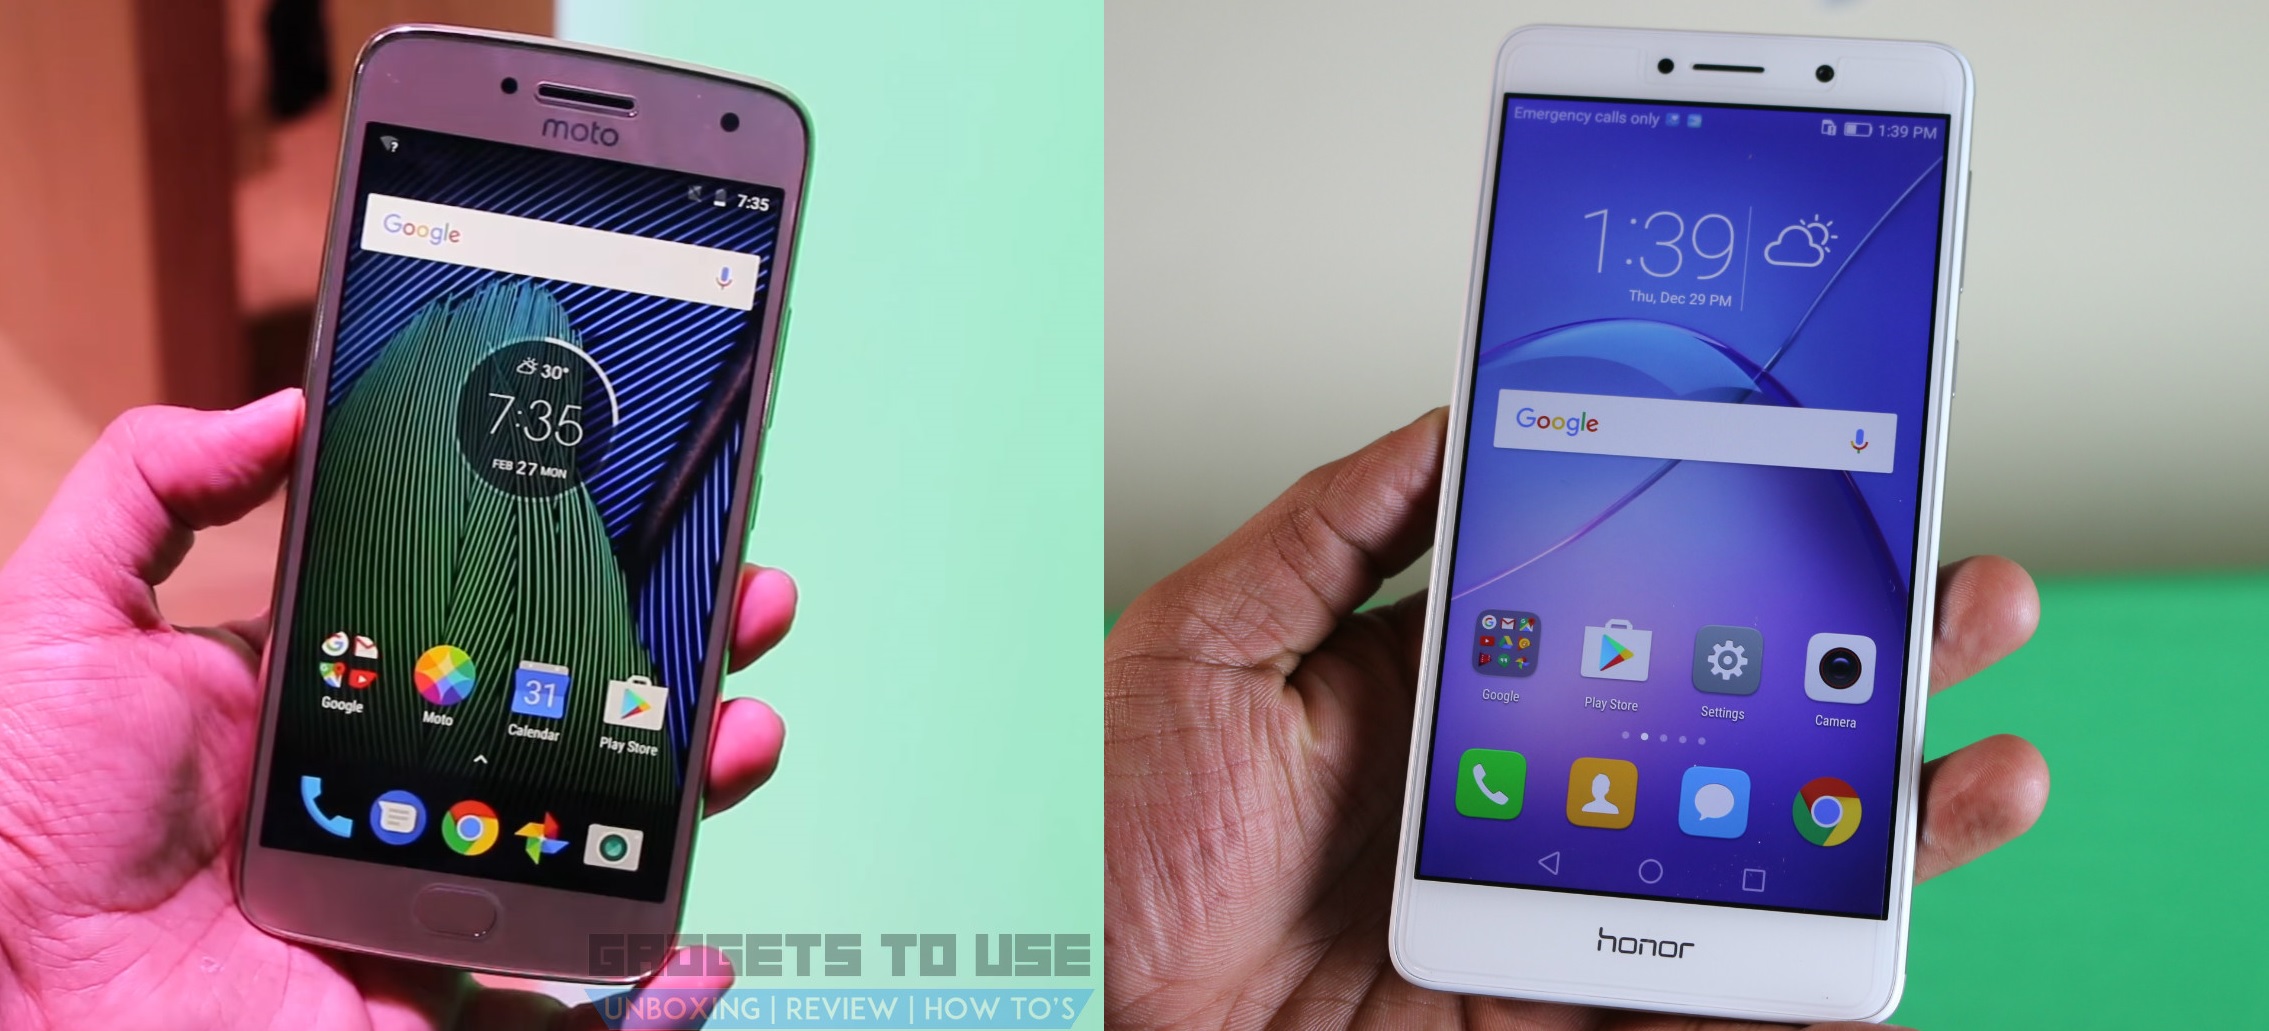 Motorola Moto G5 Plus vs Huawei Honor 6X Quick Comparison Review